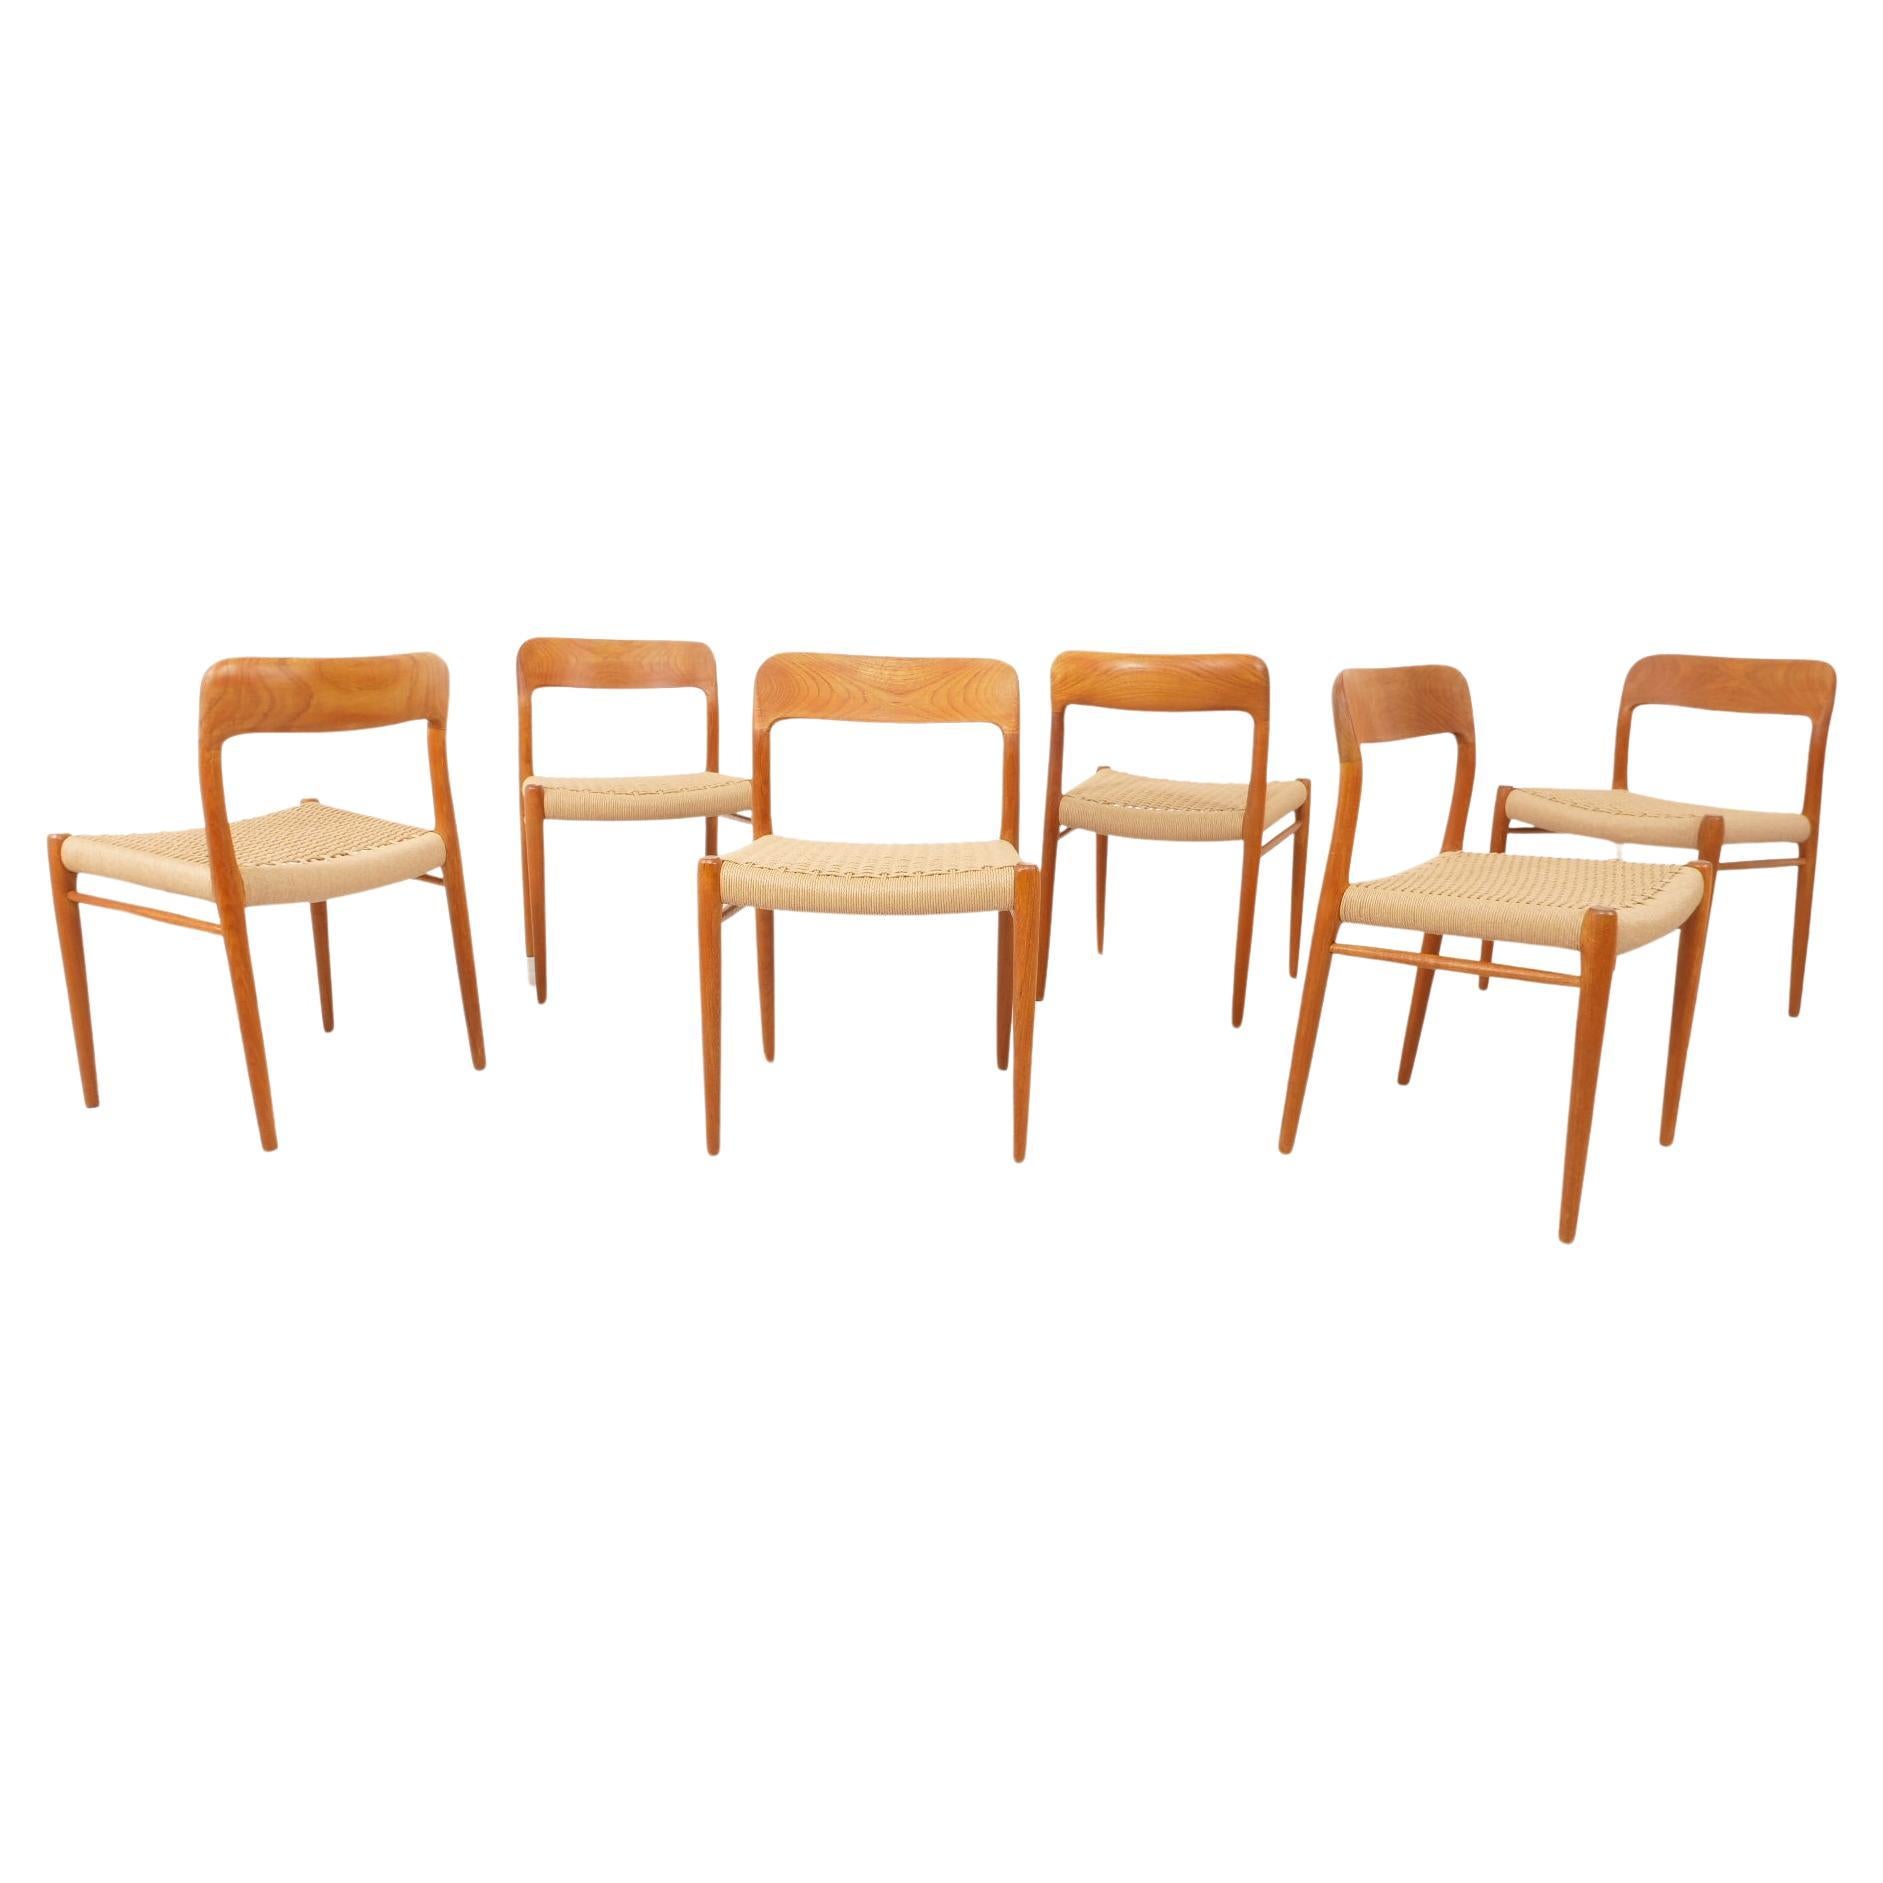 Set of 6 vintage dining chairs  Niels Otto Møller  Model 75  Papercord  Teak